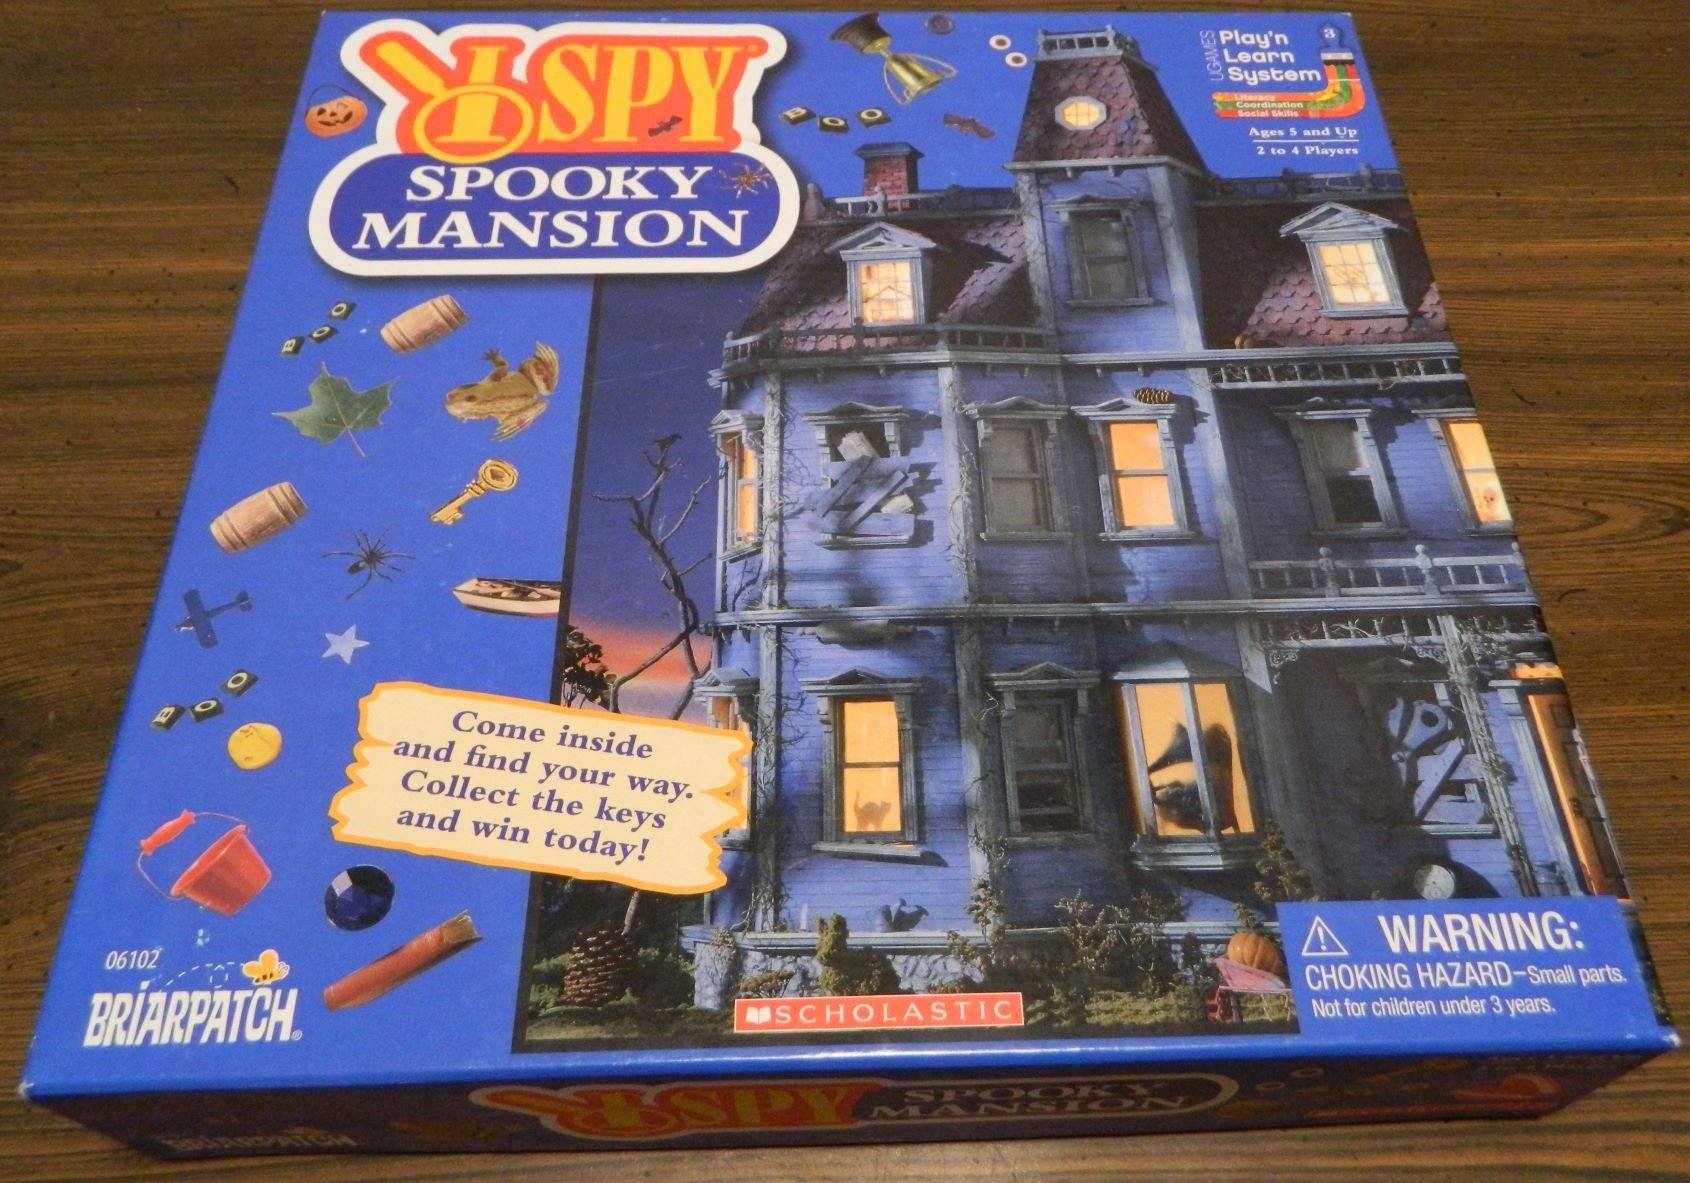 Box for I Spy Spooky Mansion